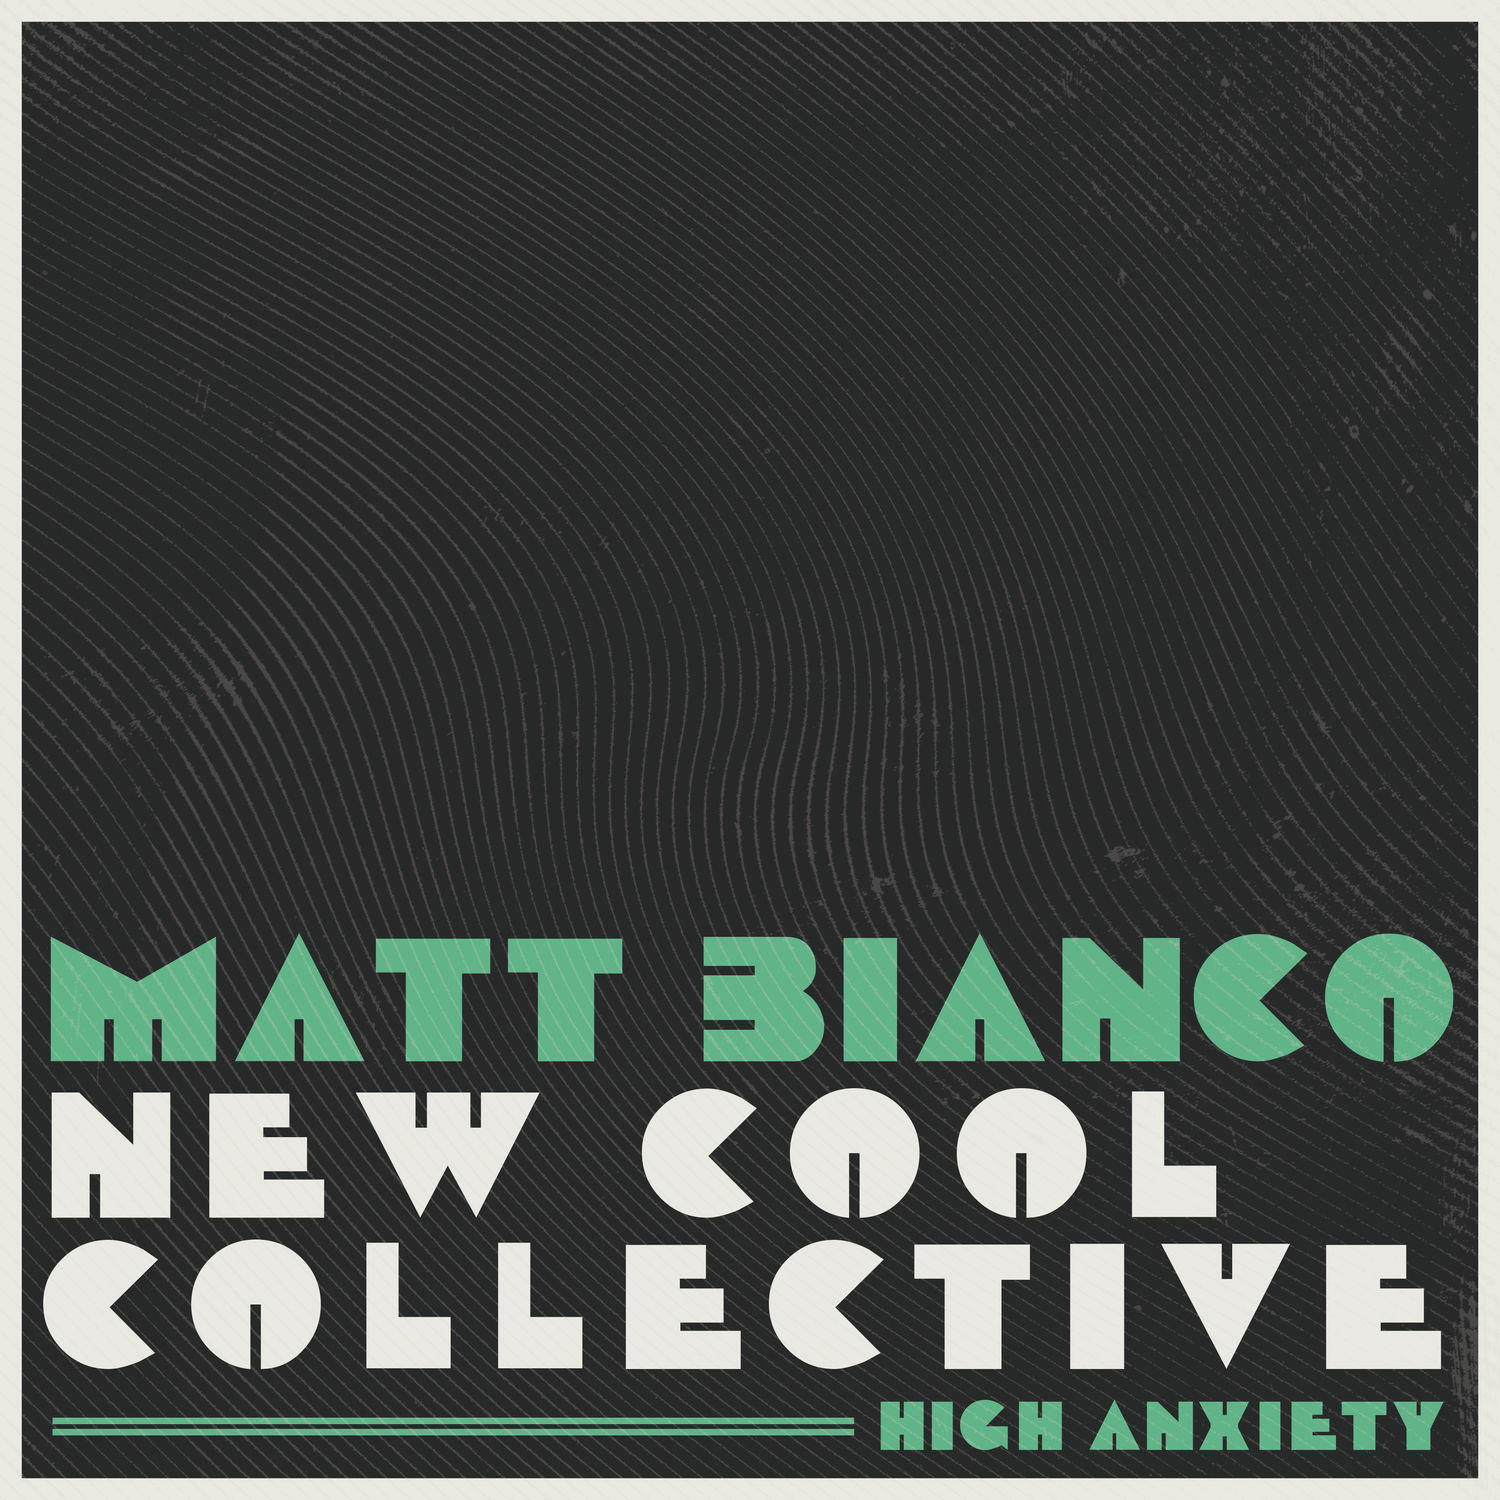 Matt Bianco - High Anxiety (2020) [FLAC 24bit/48kHz]